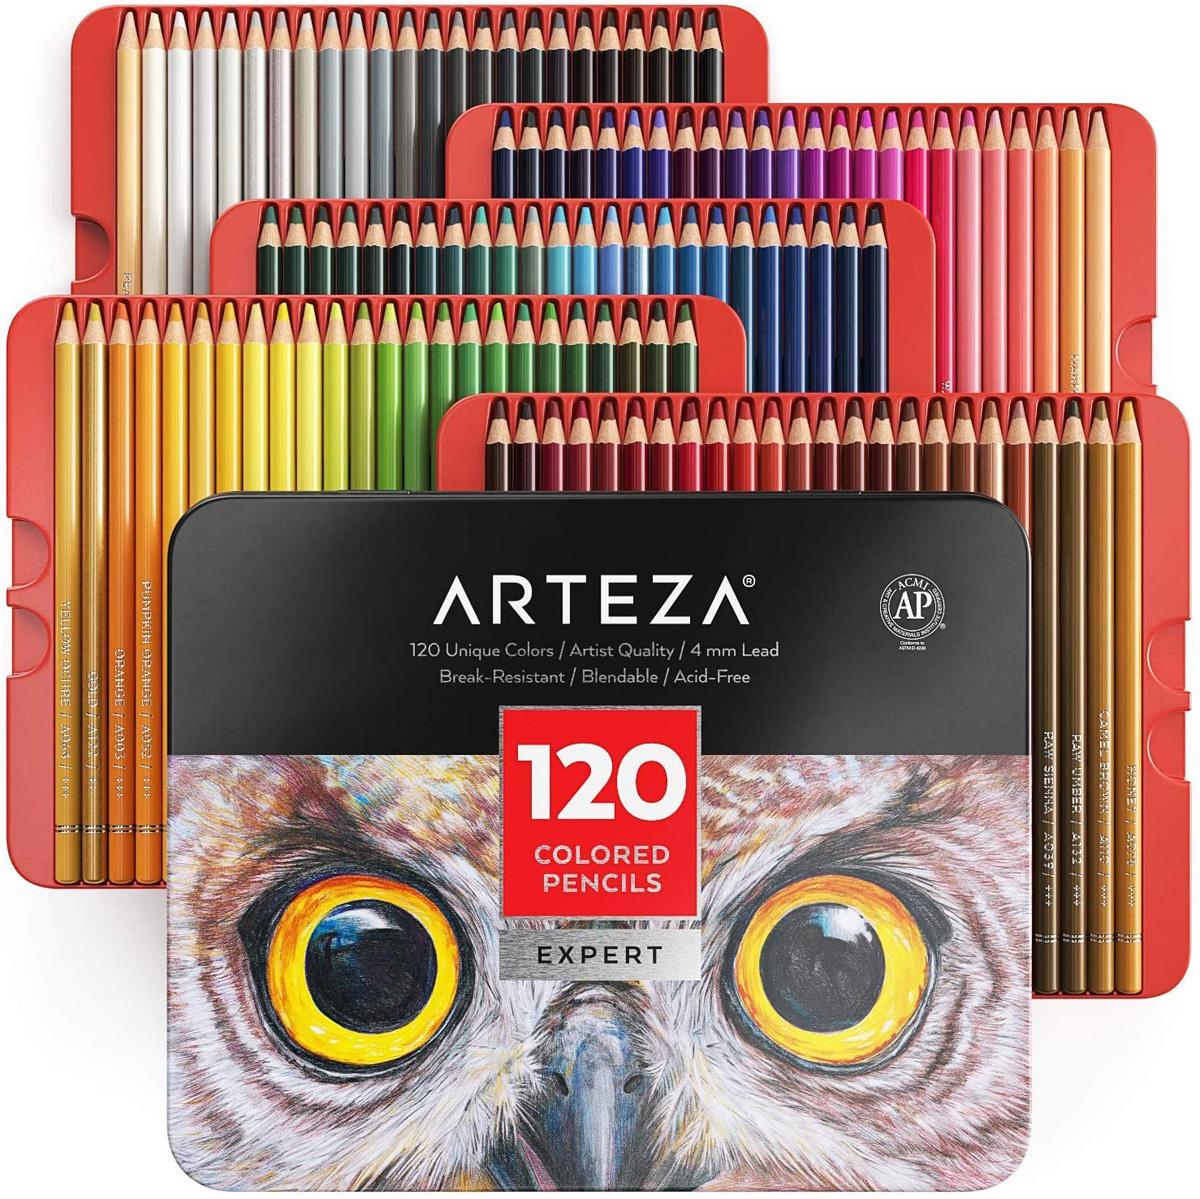 Arteza Professional Colored Pencils Set of 120 Colors for $40.70 Shipped